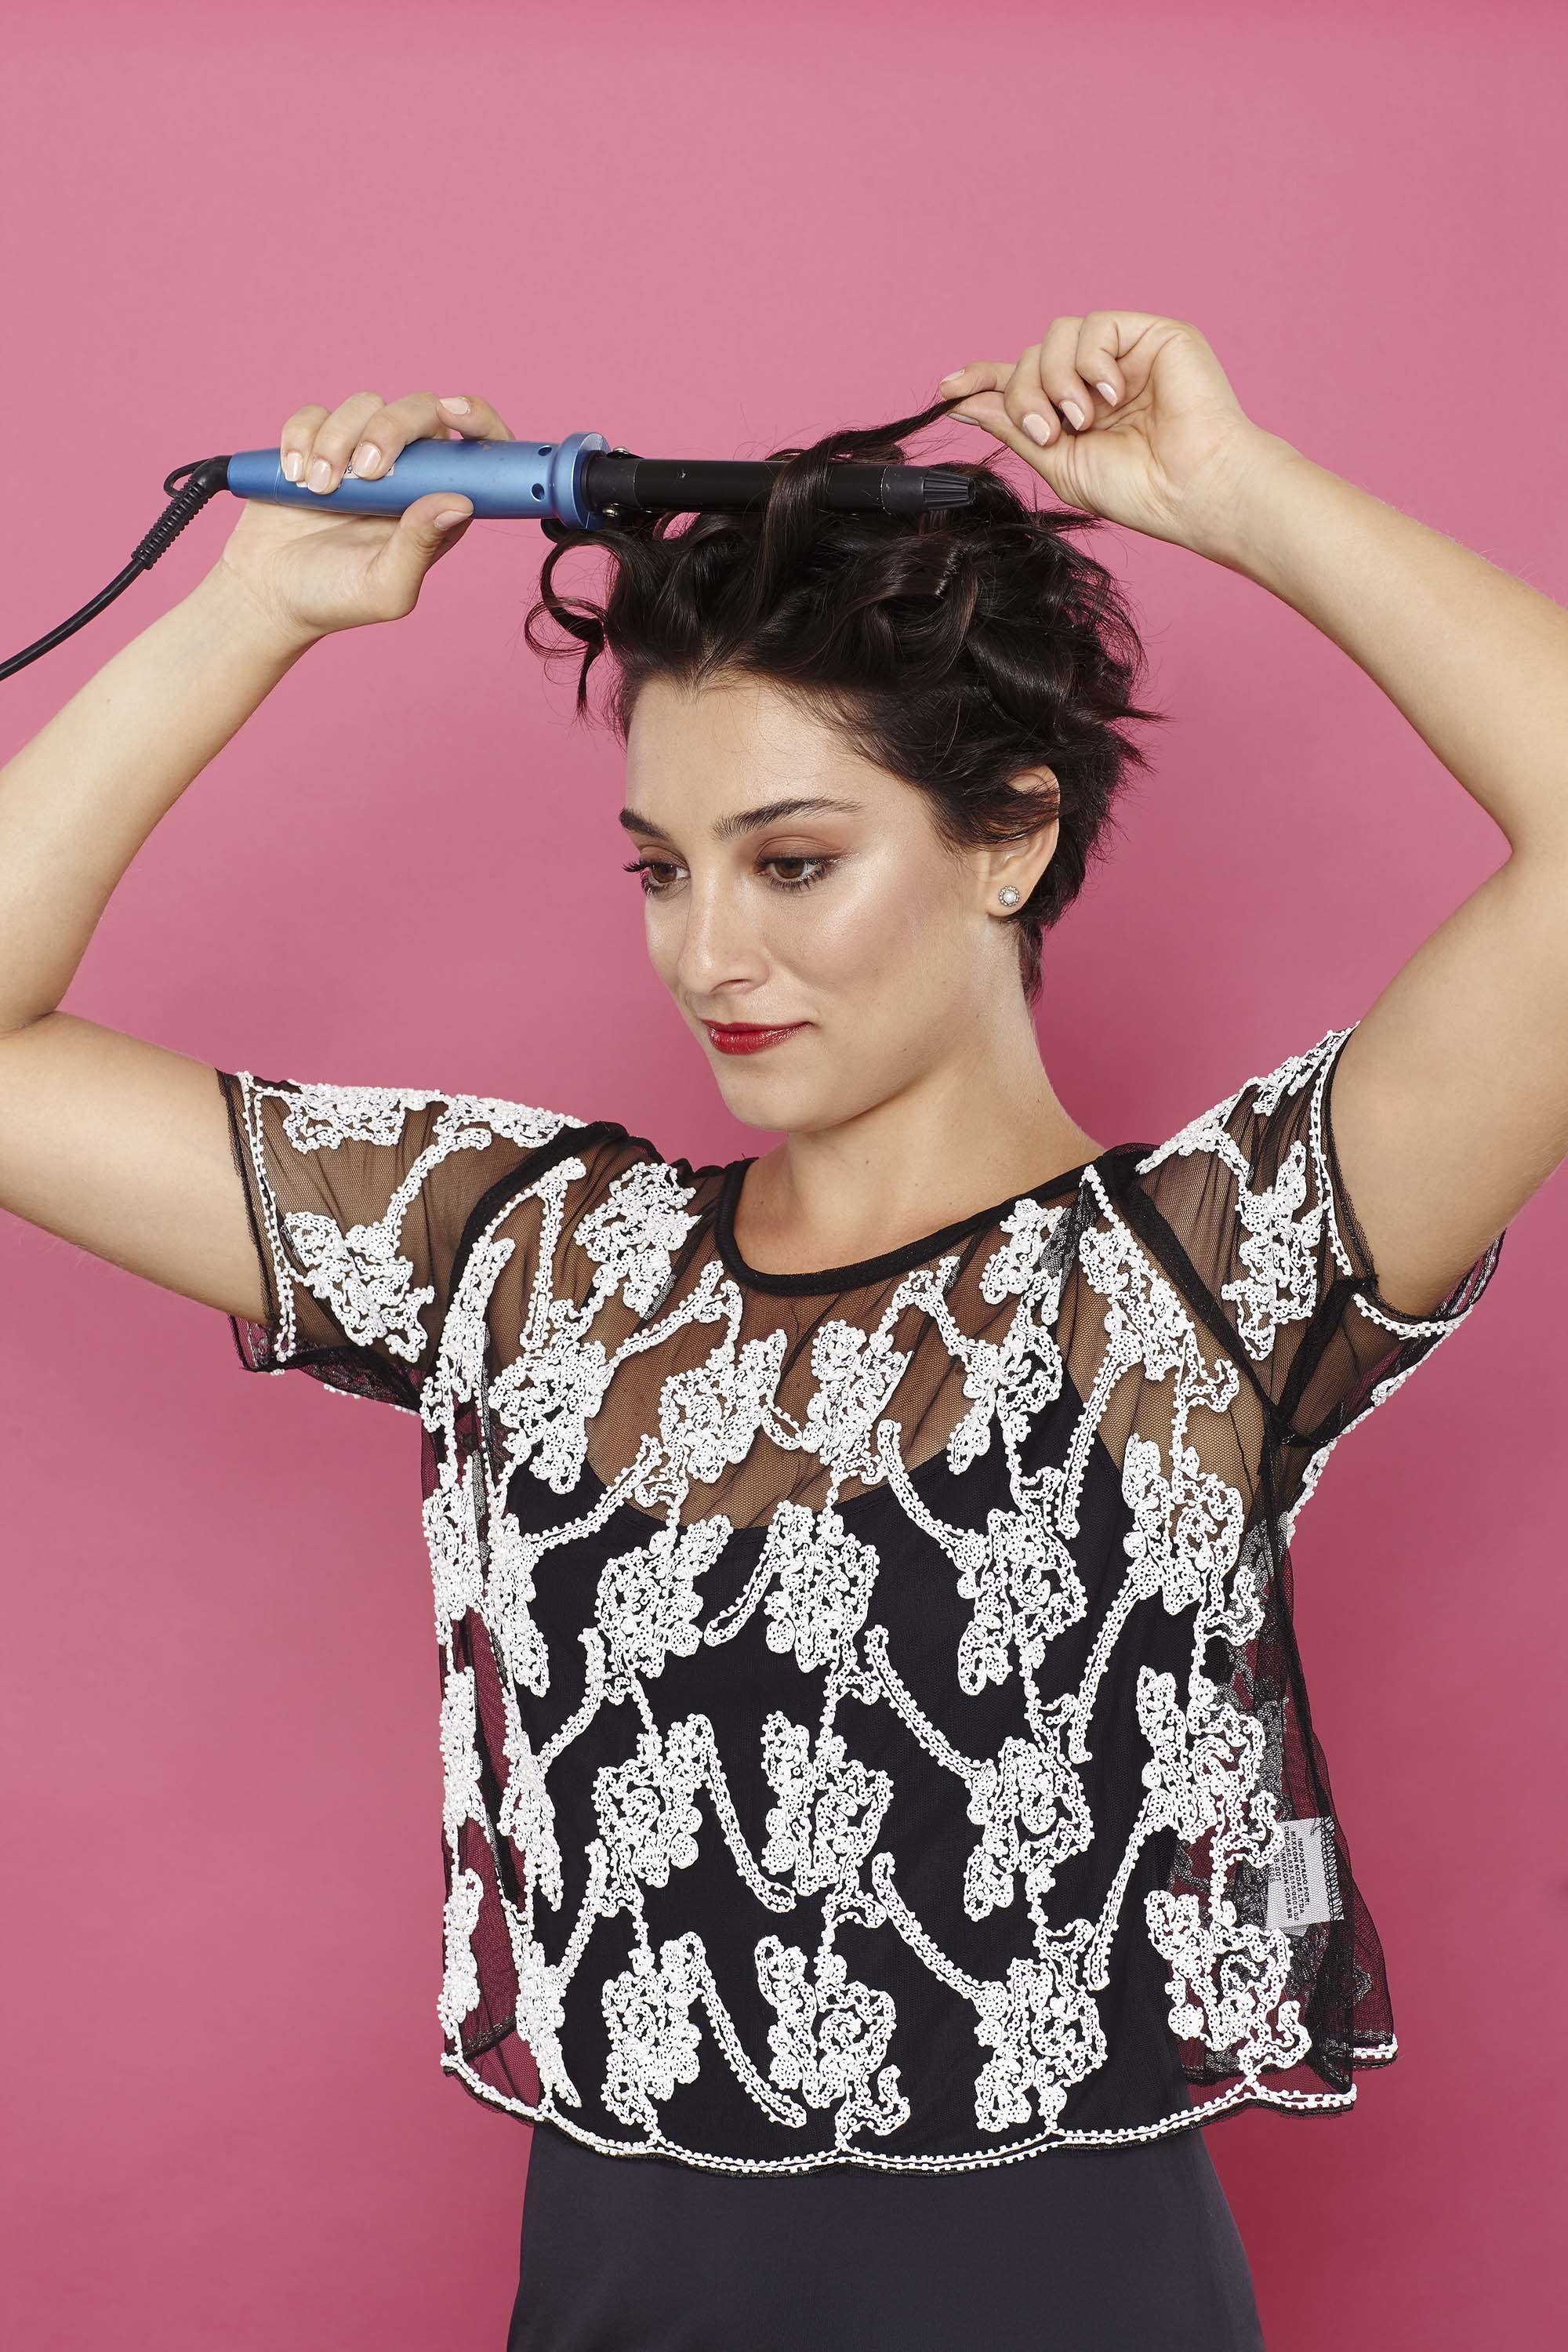 Homecoming Hair Ideas: 17 Hairstyles You Can DIY - Lulus.com Fashion Blog